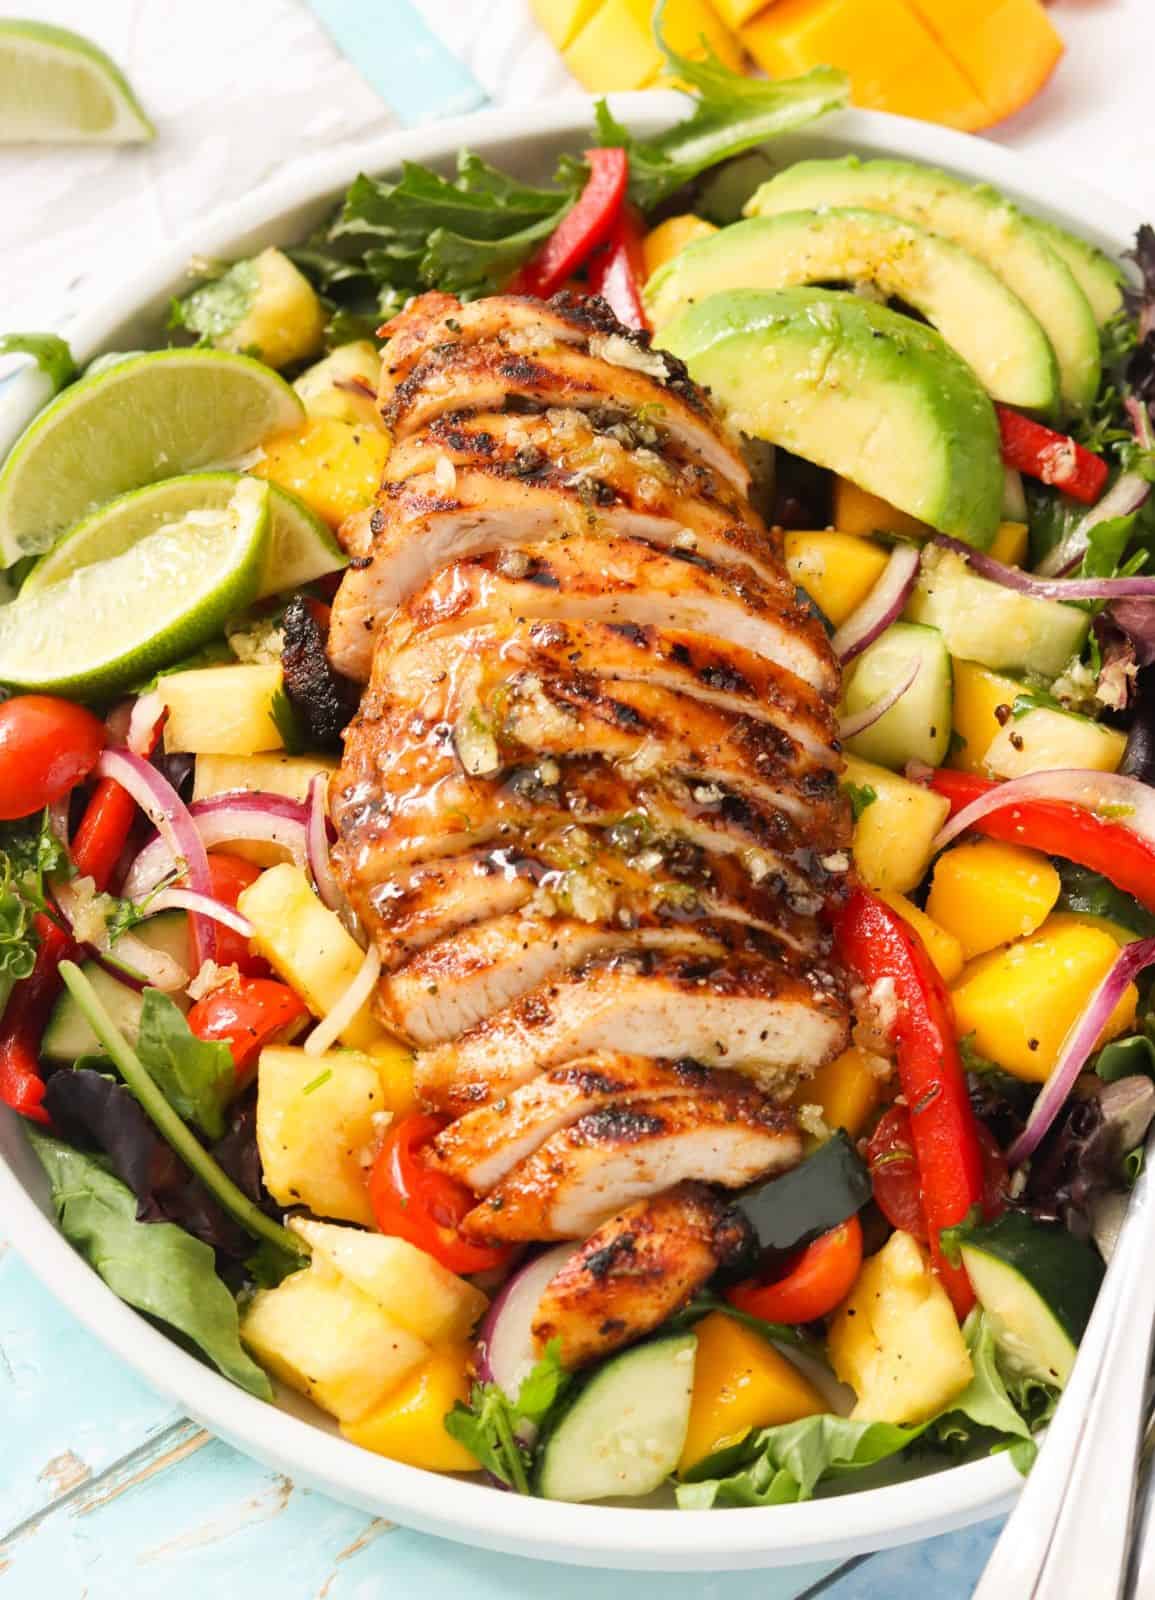 Jerk Chicken salad, a refresing summer meal